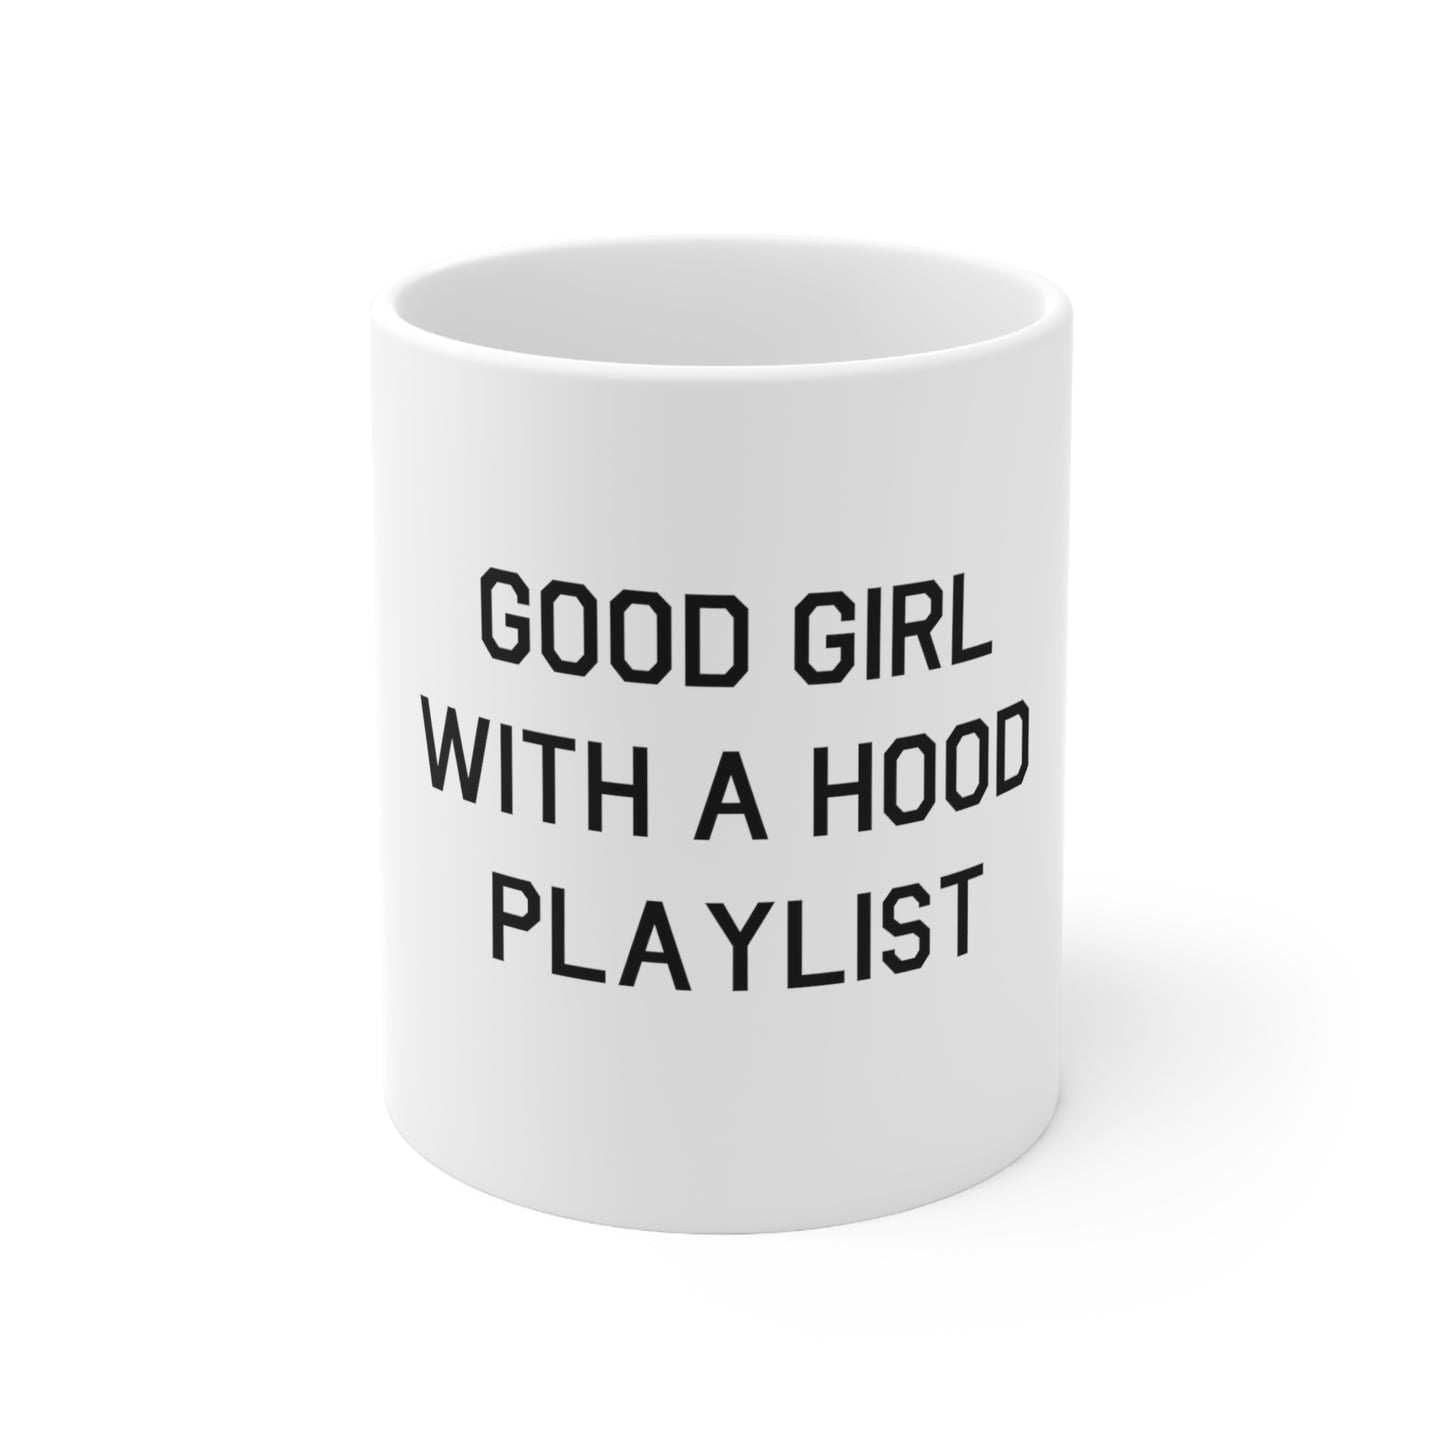 Good Girl With A Hood Playlist 11oz Mug Great Gift for Good Girl With A Hood Playlist